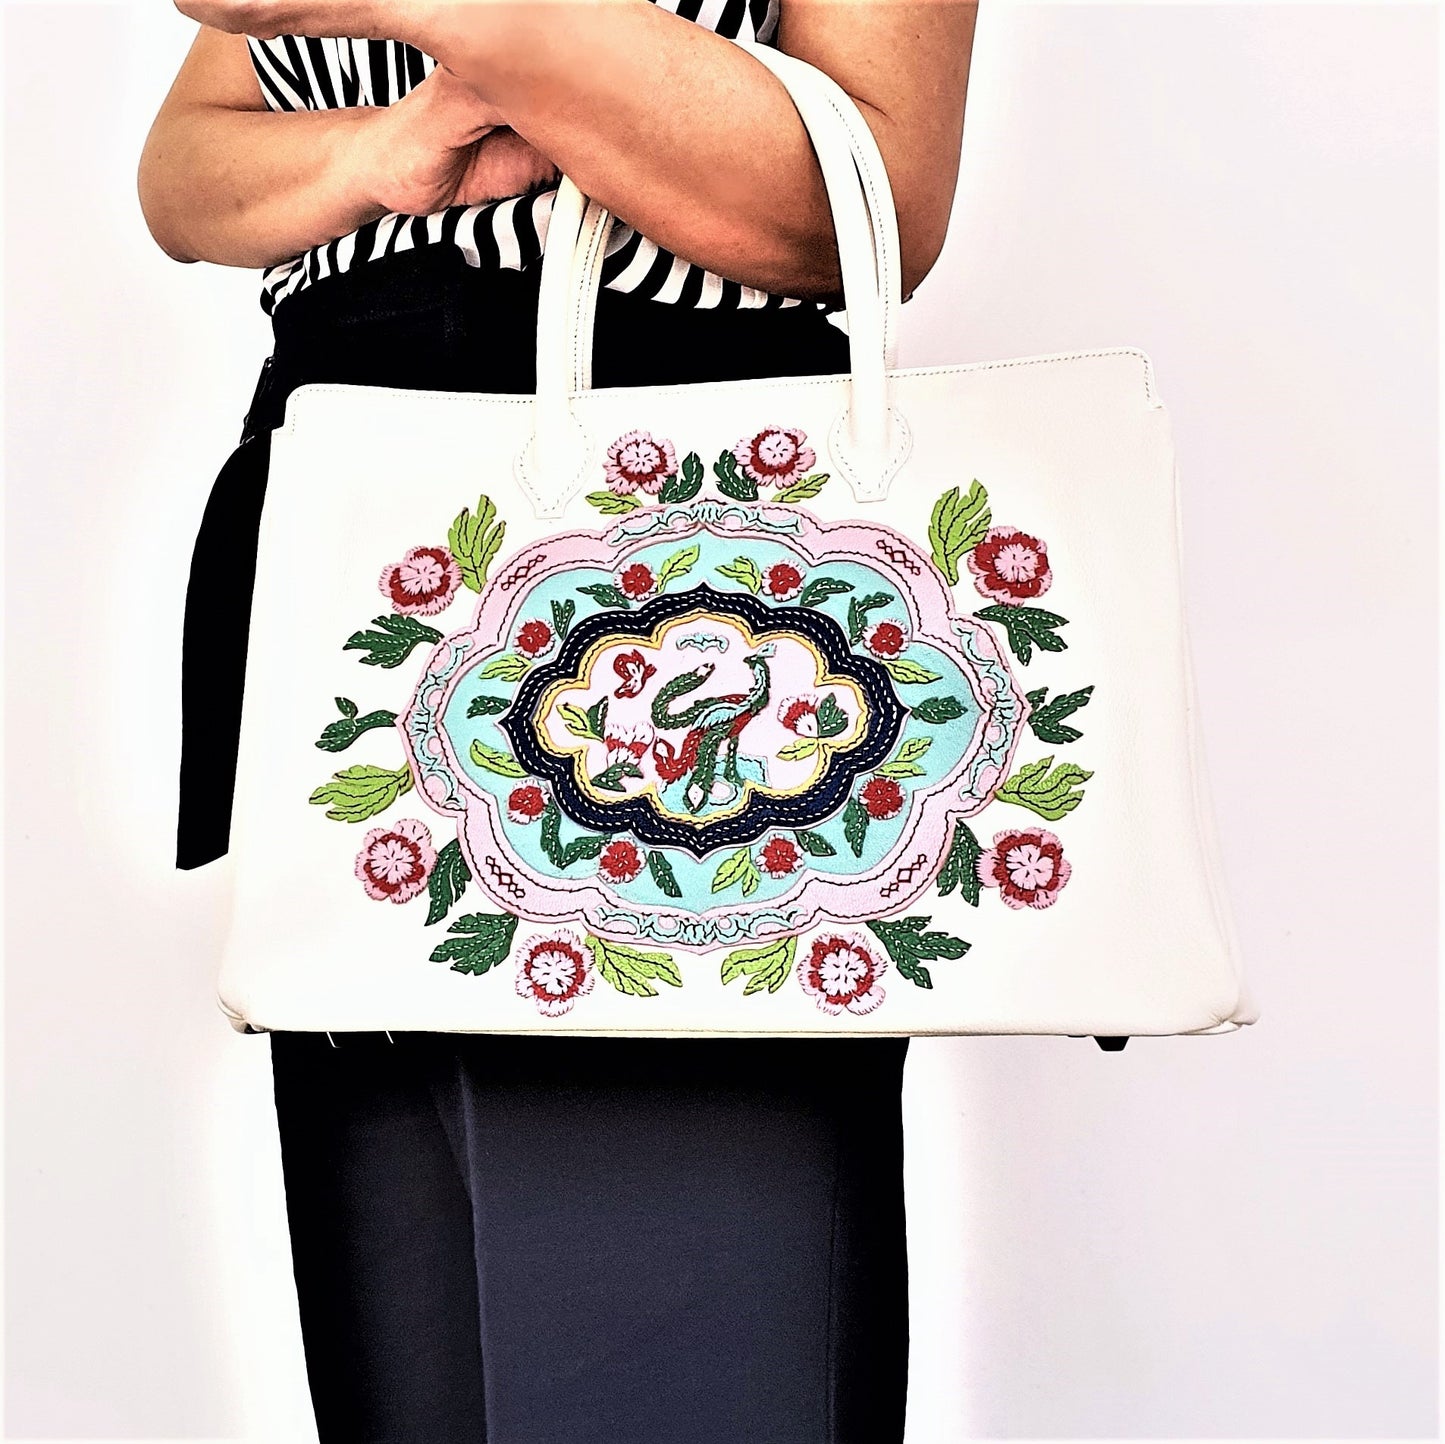 Studio Arkademie NYONYA 30 Handbag, Multicolour